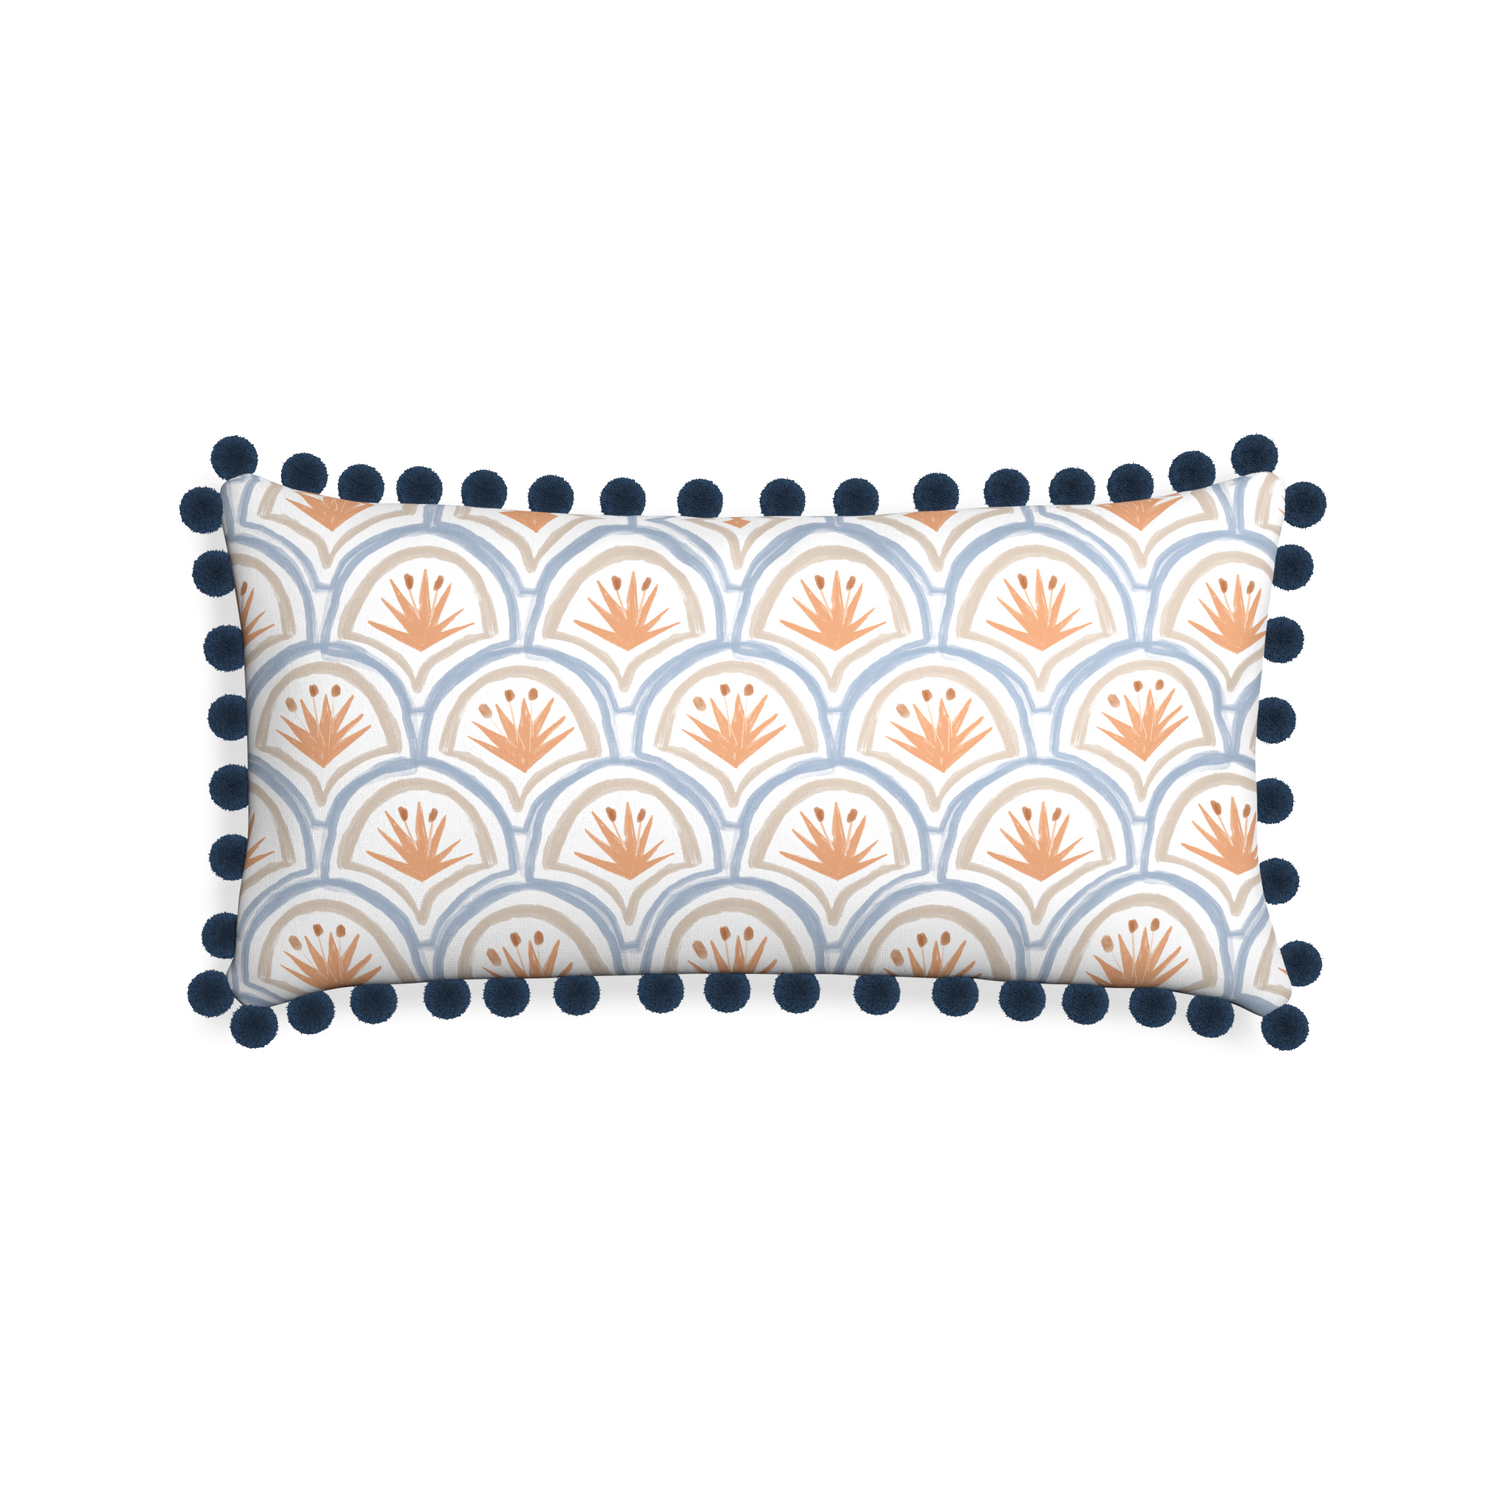 Midi-lumbar thatcher apricot custom art deco palm patternpillow with c on white background